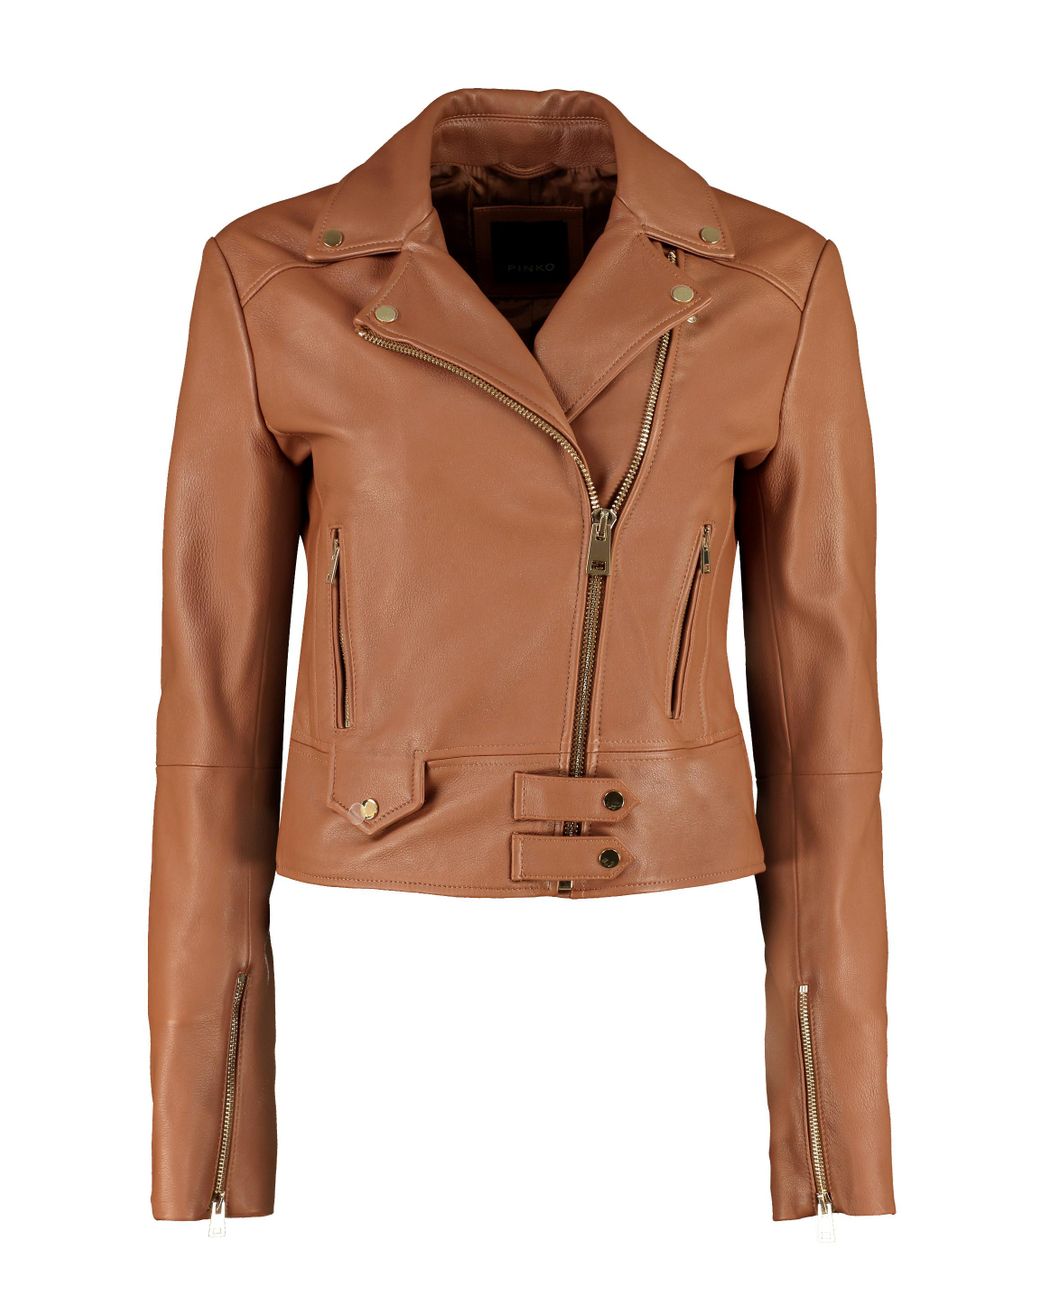 Pinko Sensibile Leather Biker Jacket in Brown - Lyst